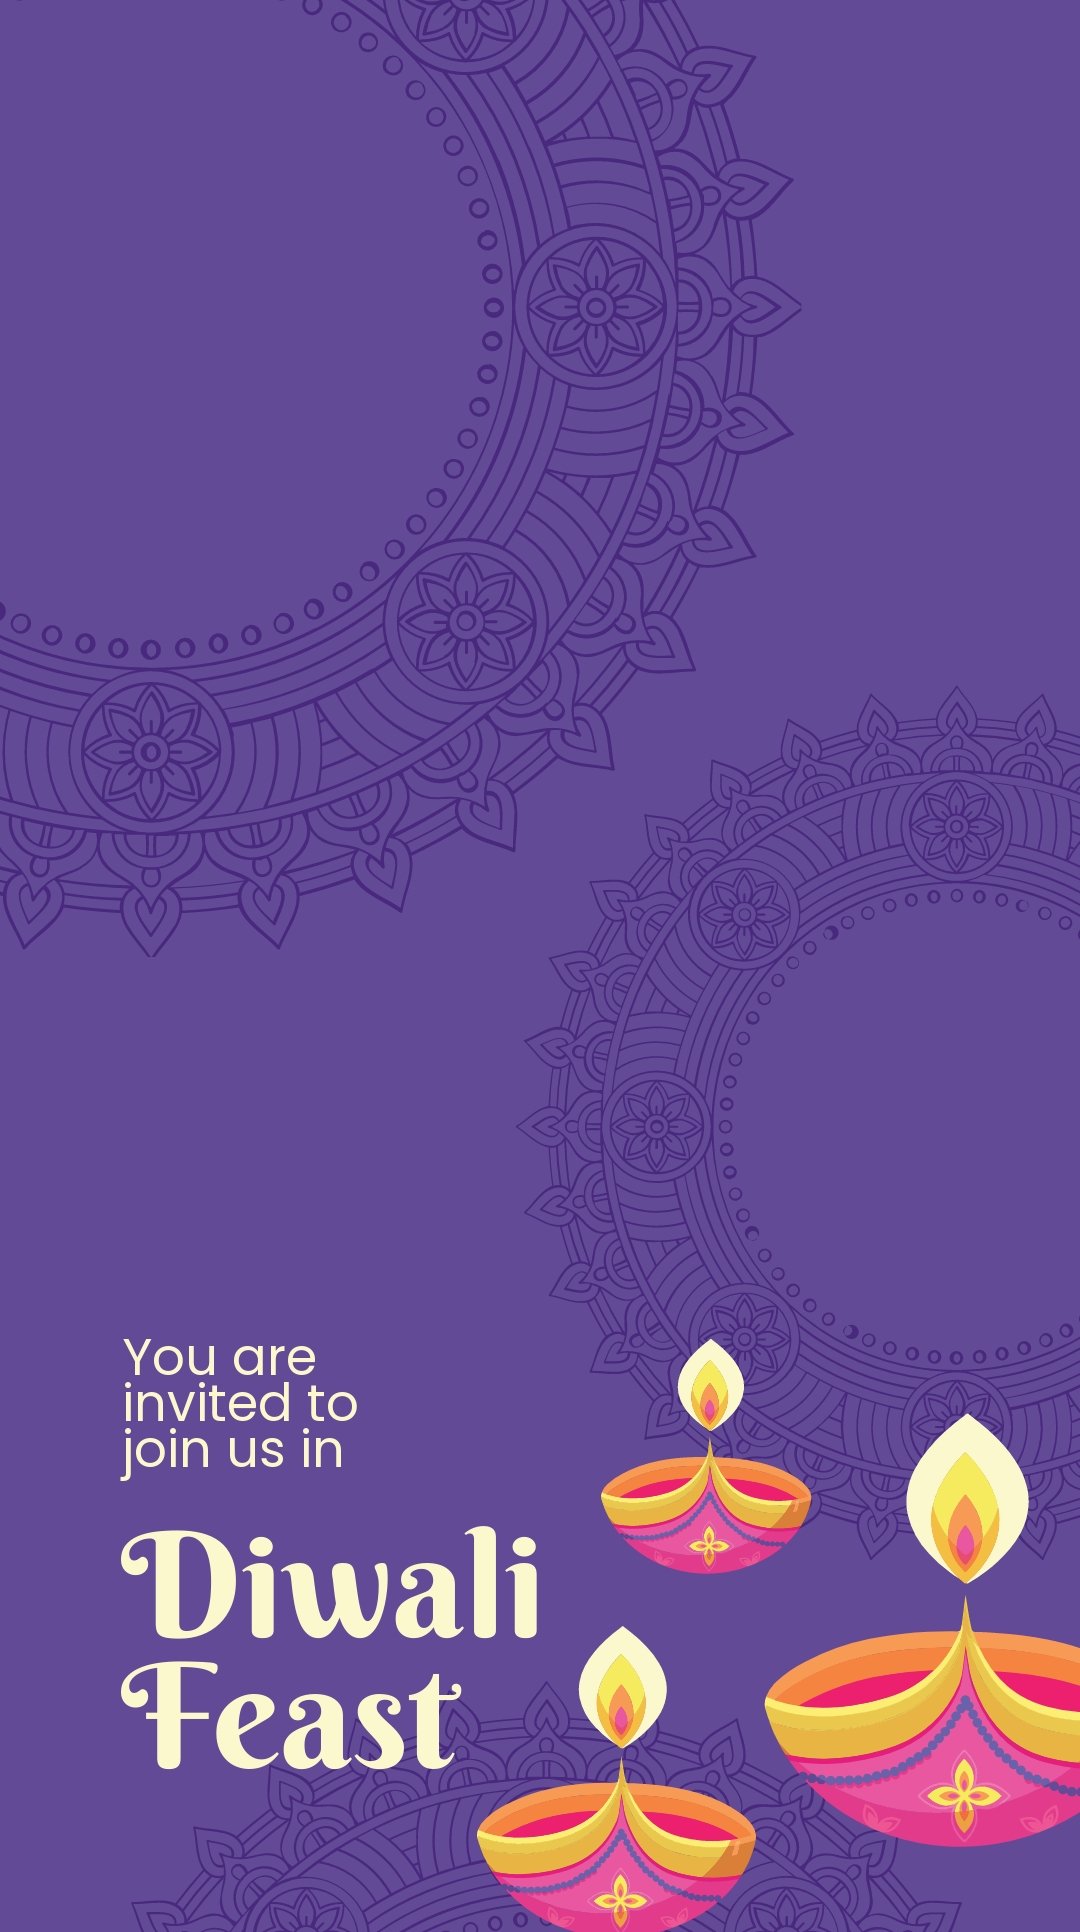 Diwali Feast Snapchat Geofilter